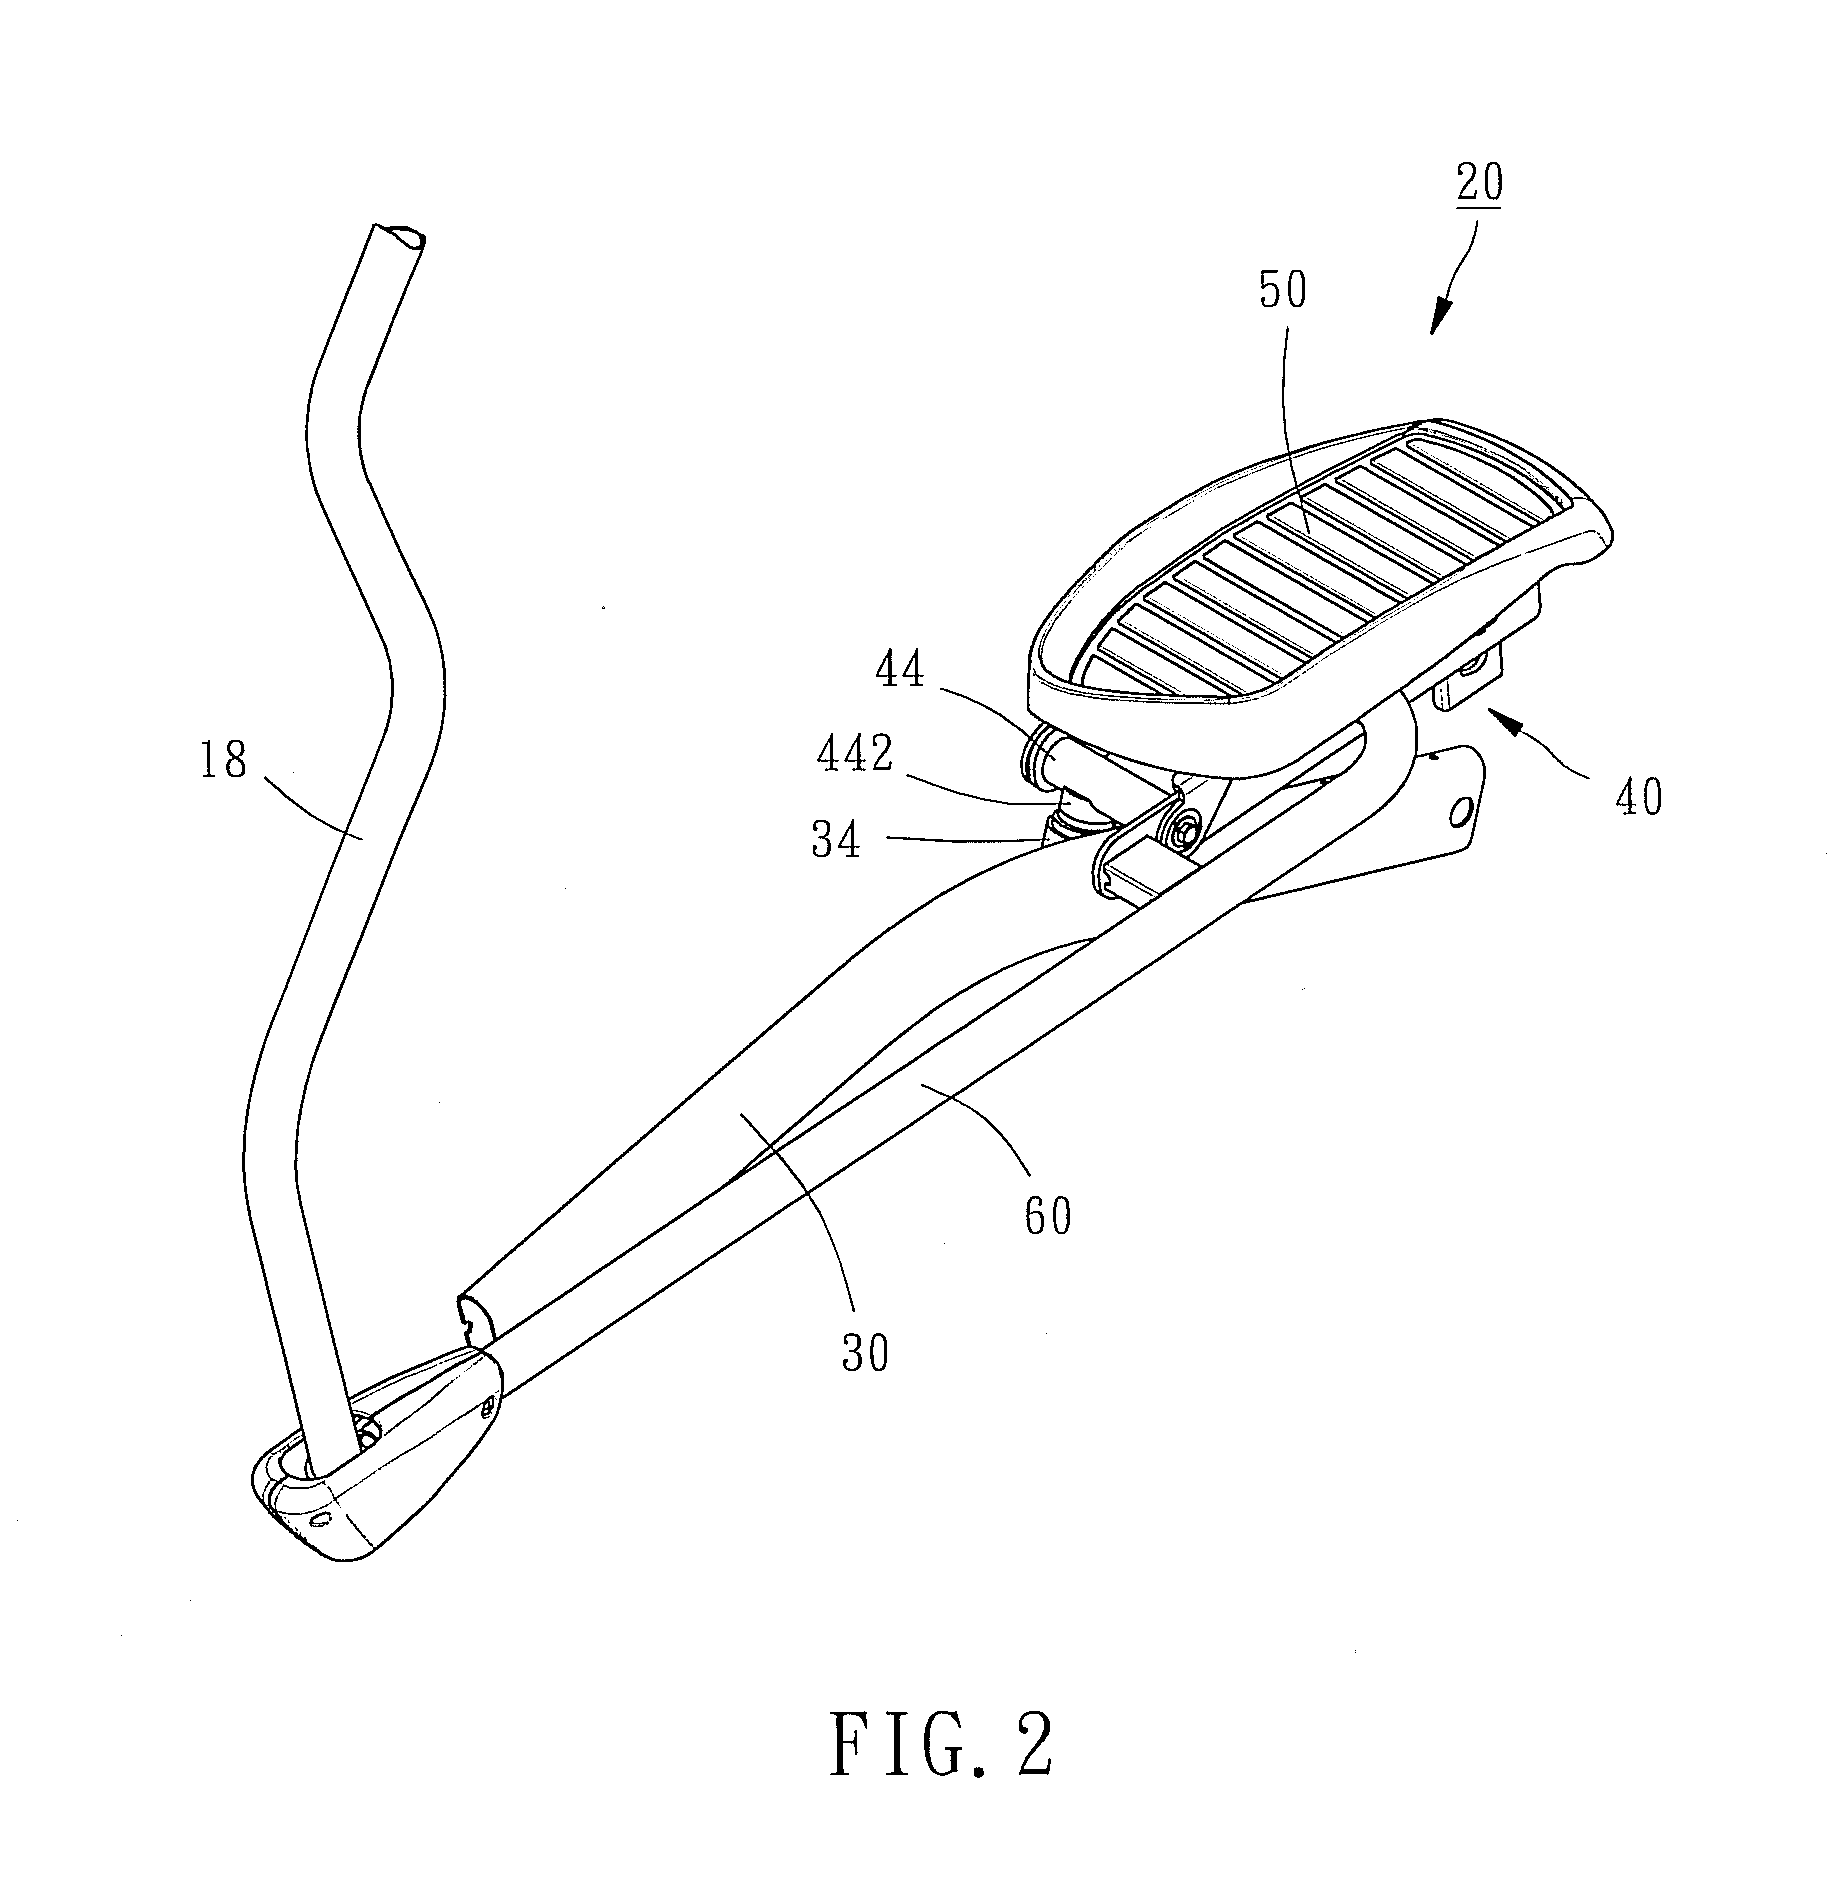 Pedal correction mechanism for elliptical trainer